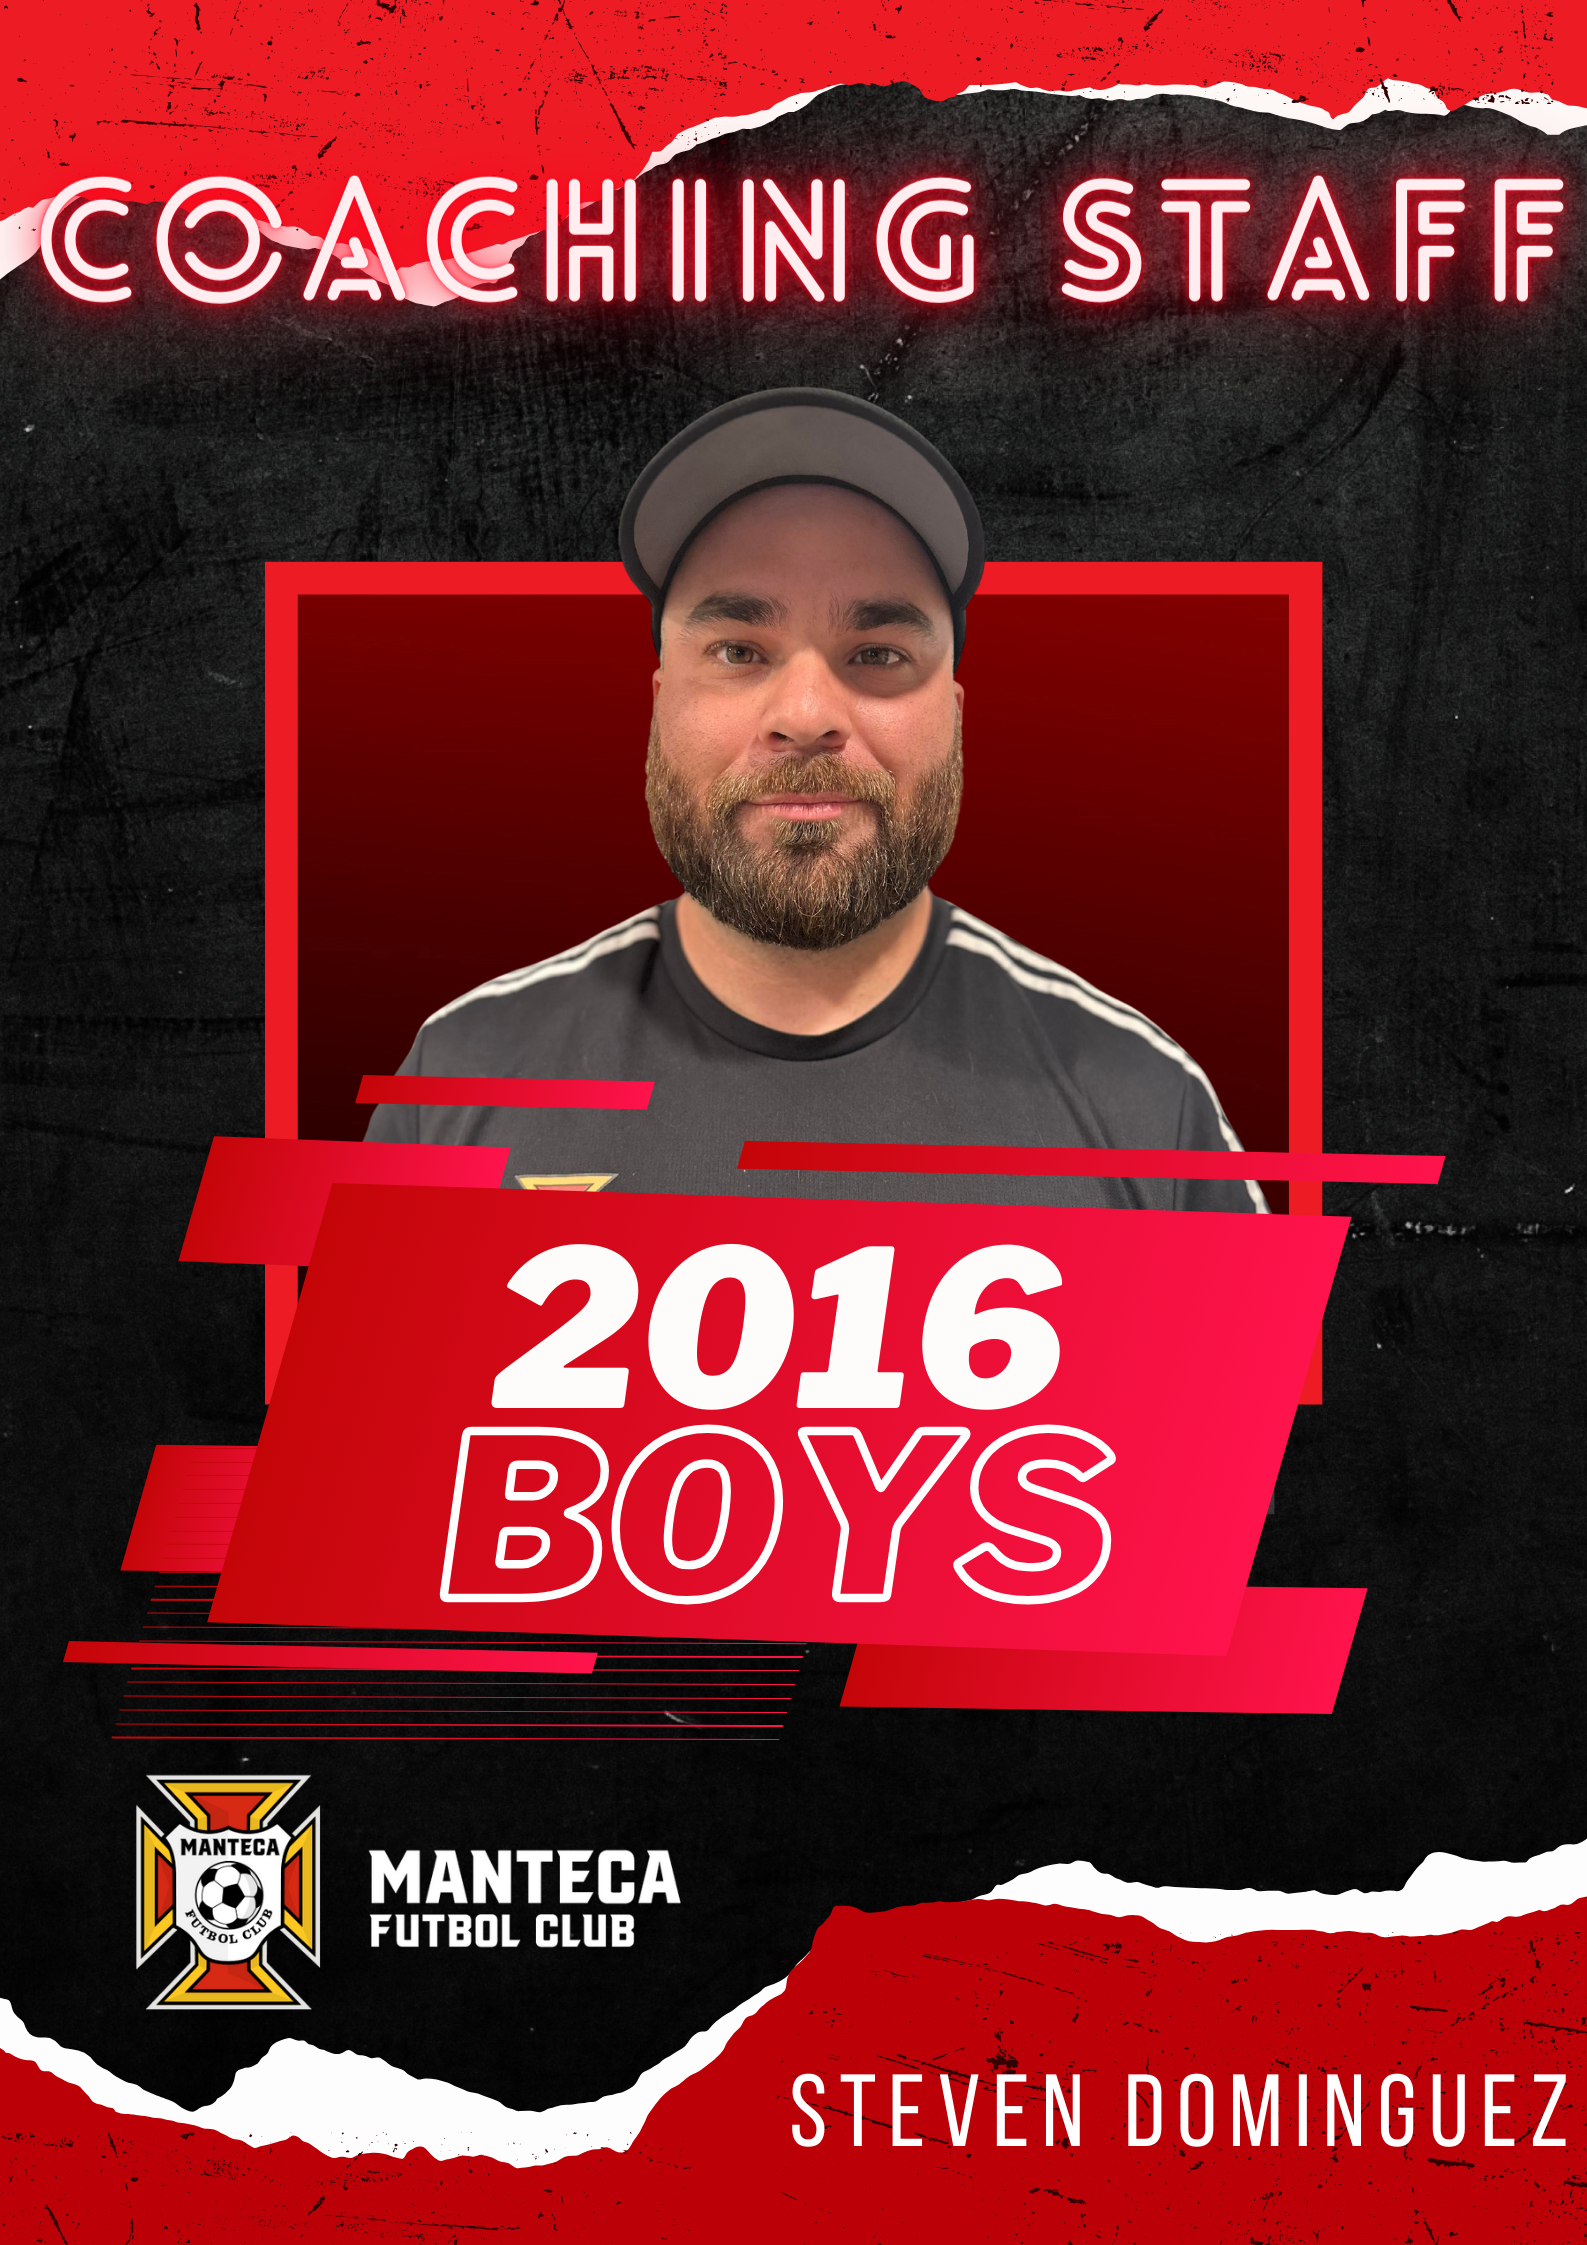 Manteca Futbol Club 16 Boys Red